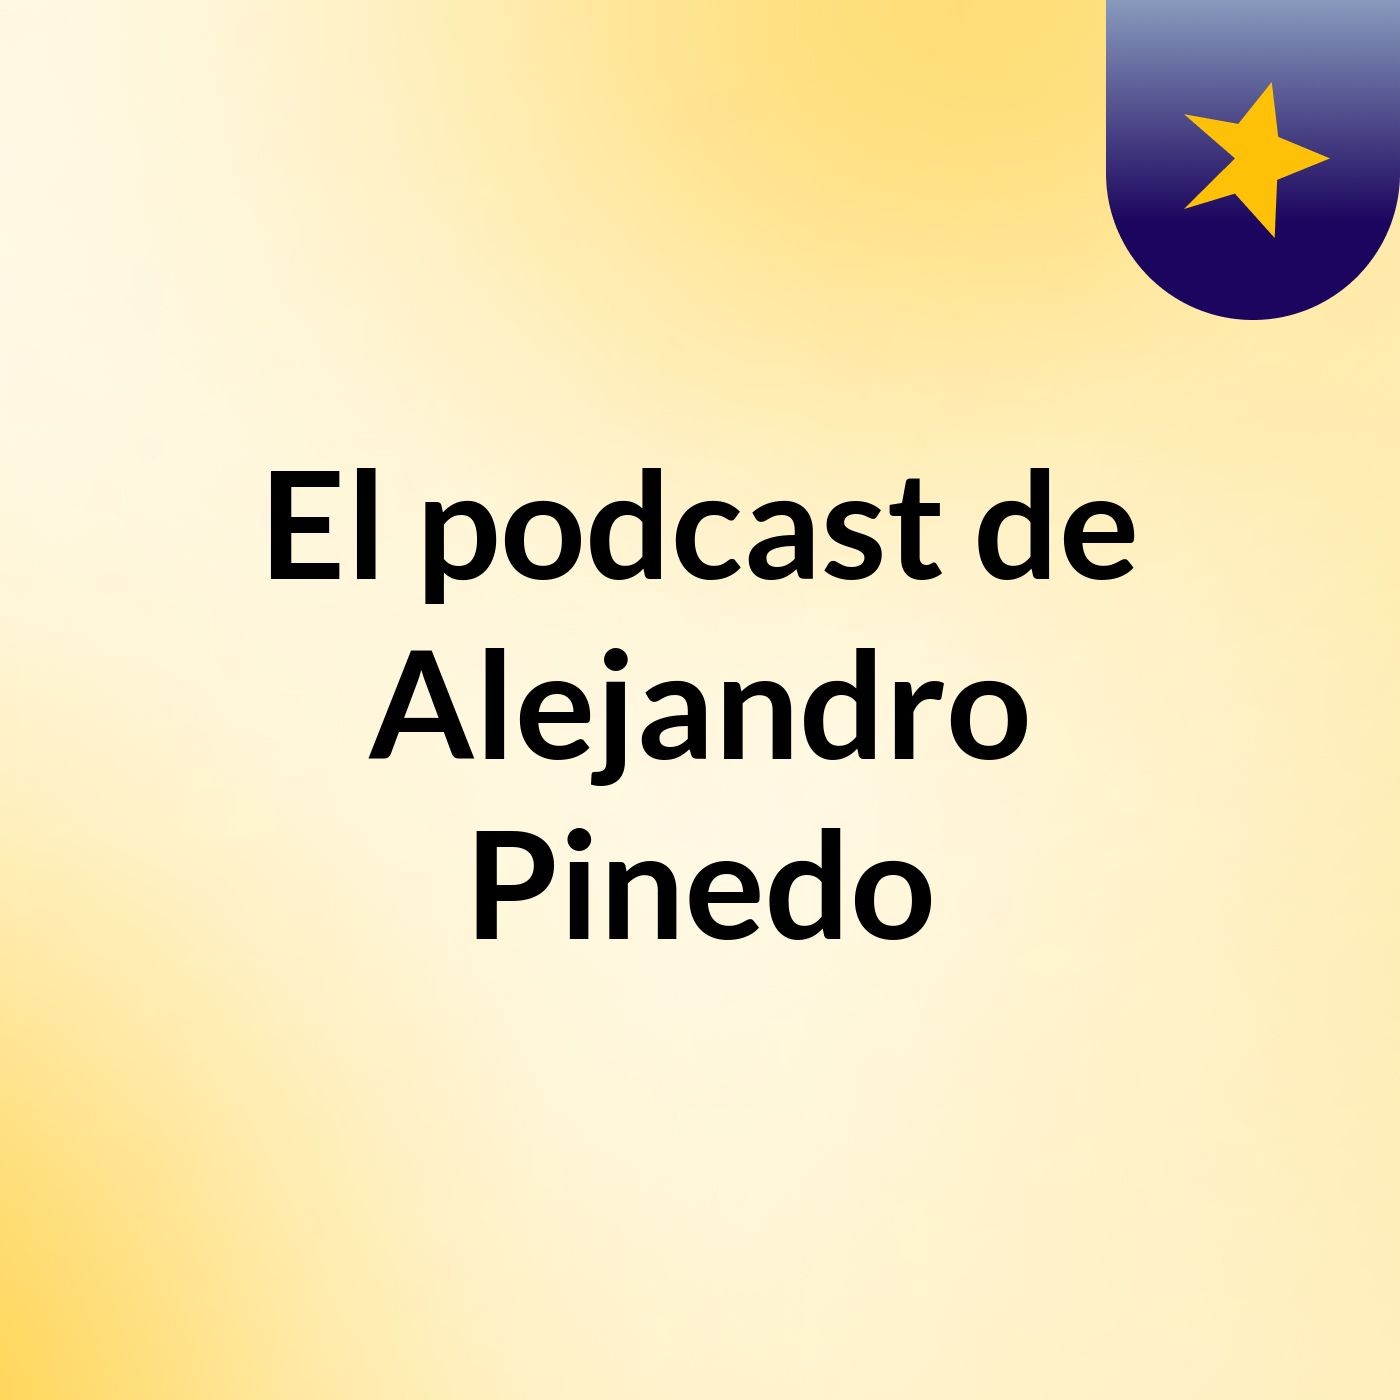 El podcast de Alejandro Pinedo